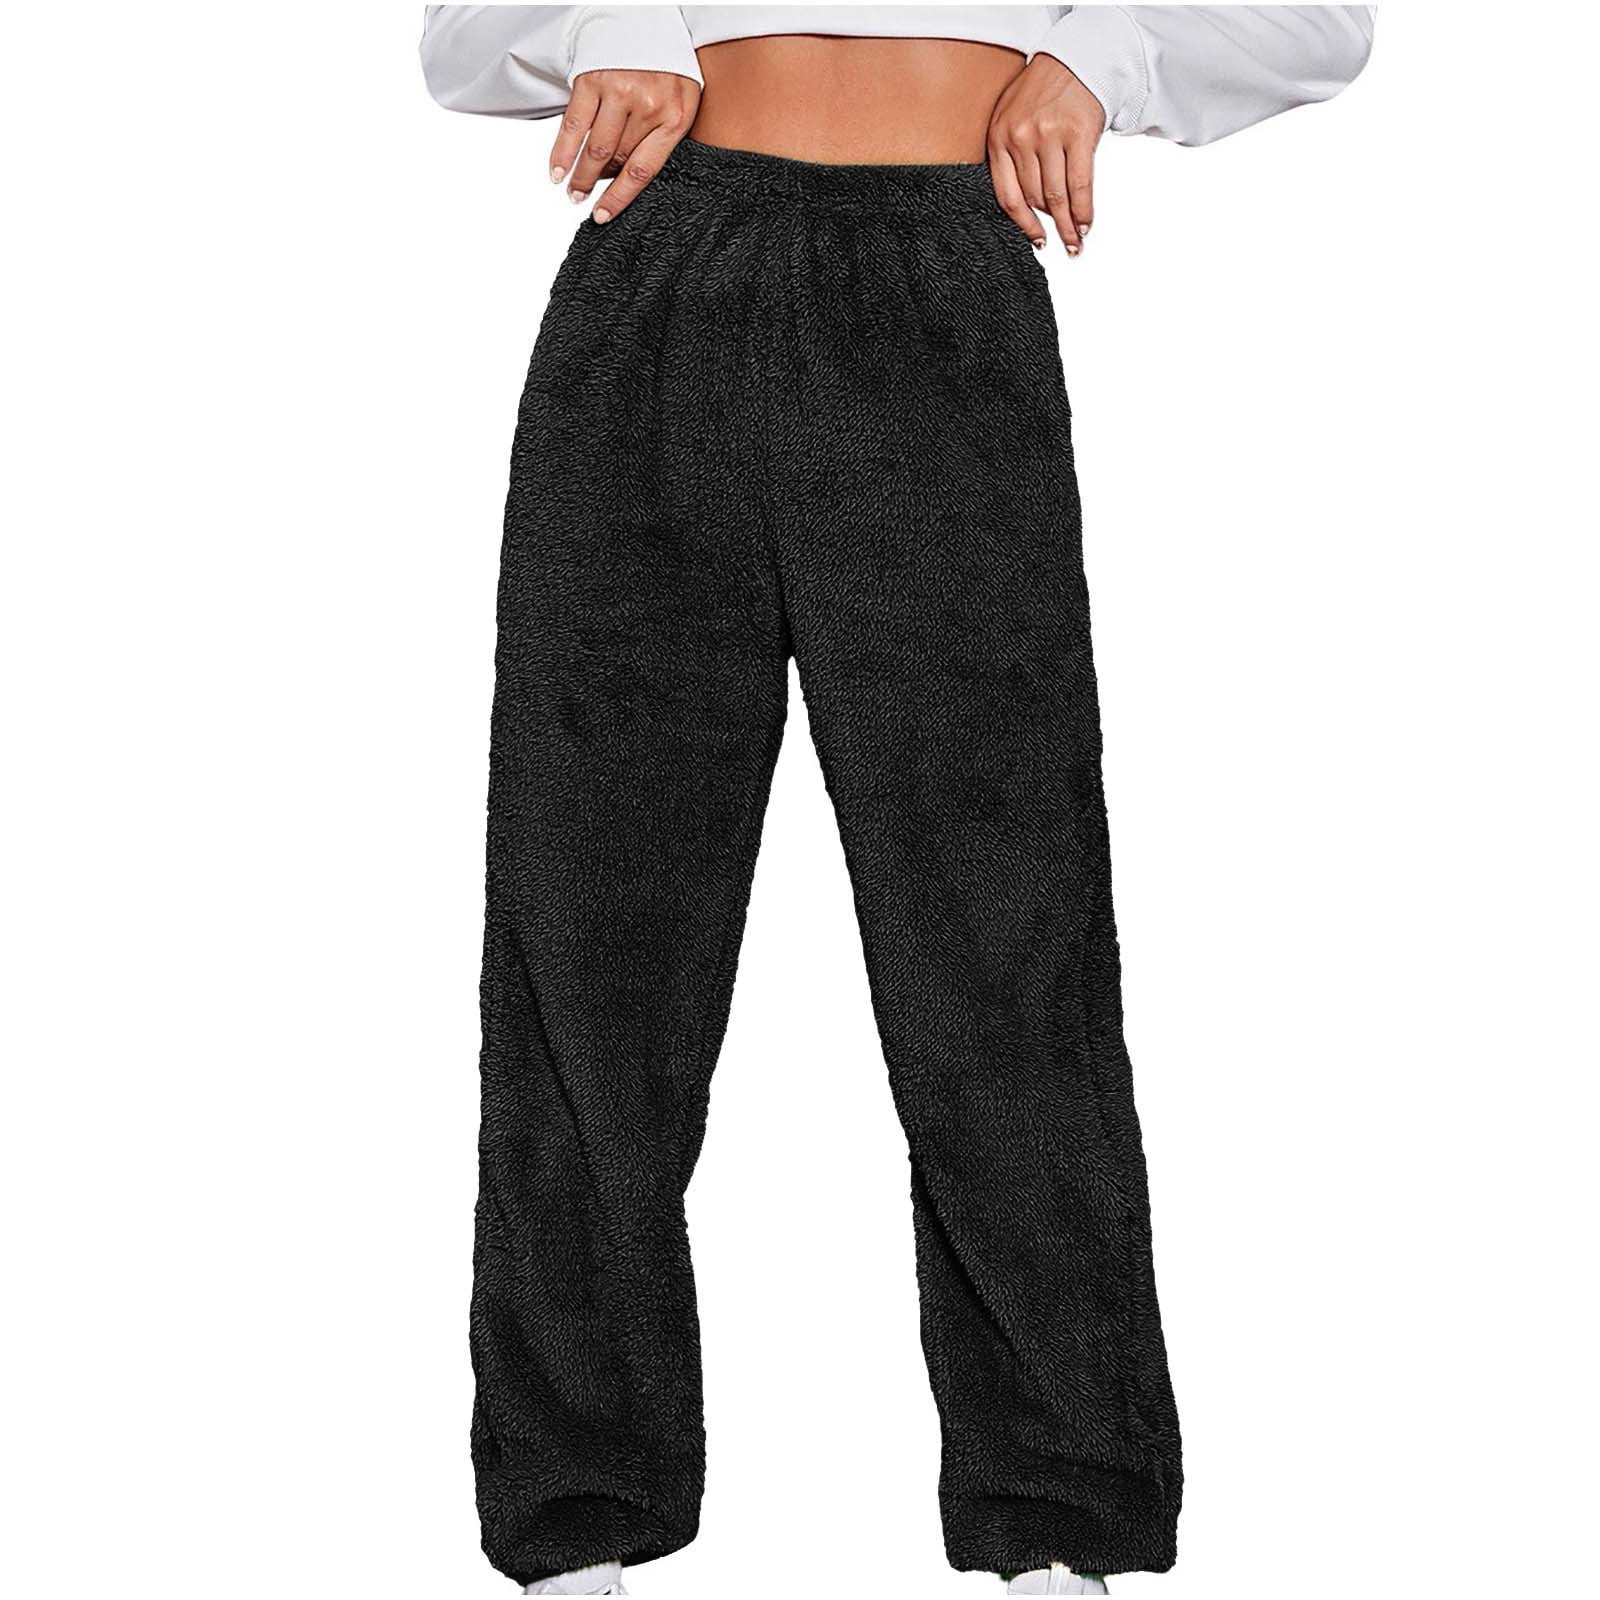 RQYYD Sherpa Lined Sweatpants for Women Winter Warm Fleece Lined Sweatpants  with Pockets Casual Heart Jogger Fleece Pants Black 3XL